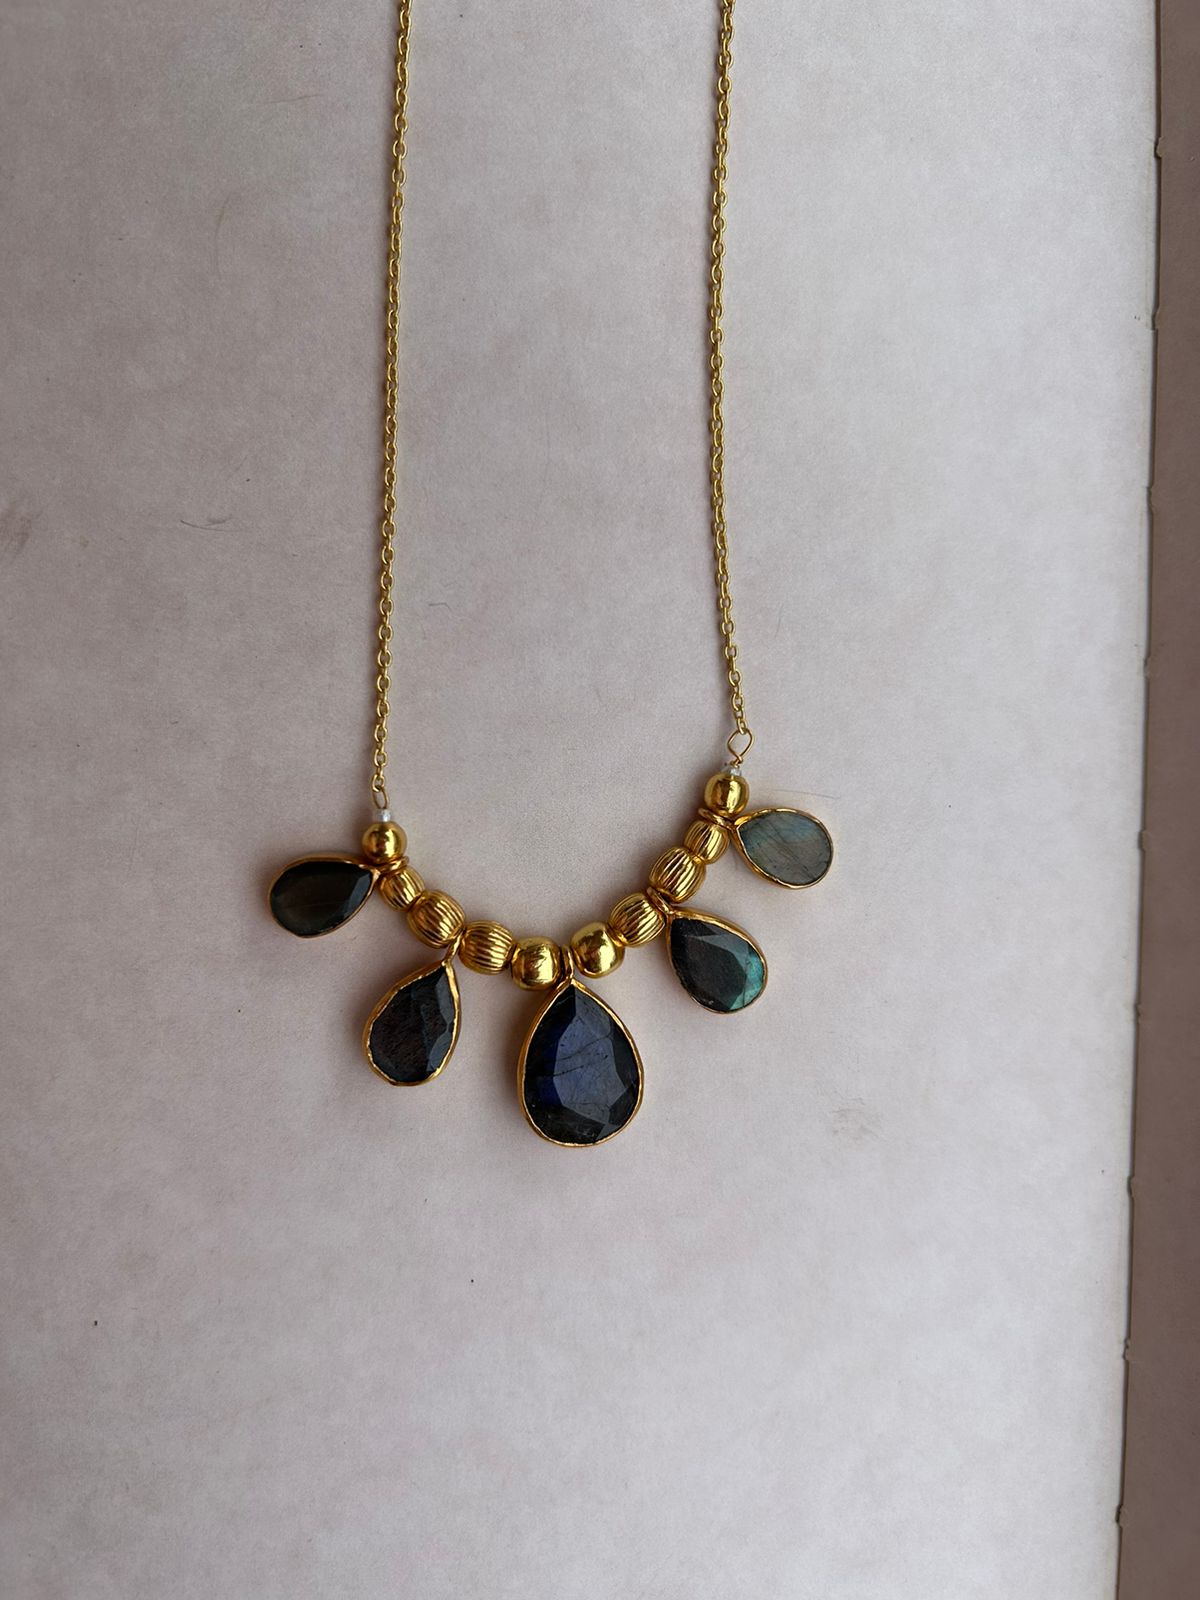 Labradorite necklace, sterling silver, 24 karat gold plating, faceted labradorite stones. 